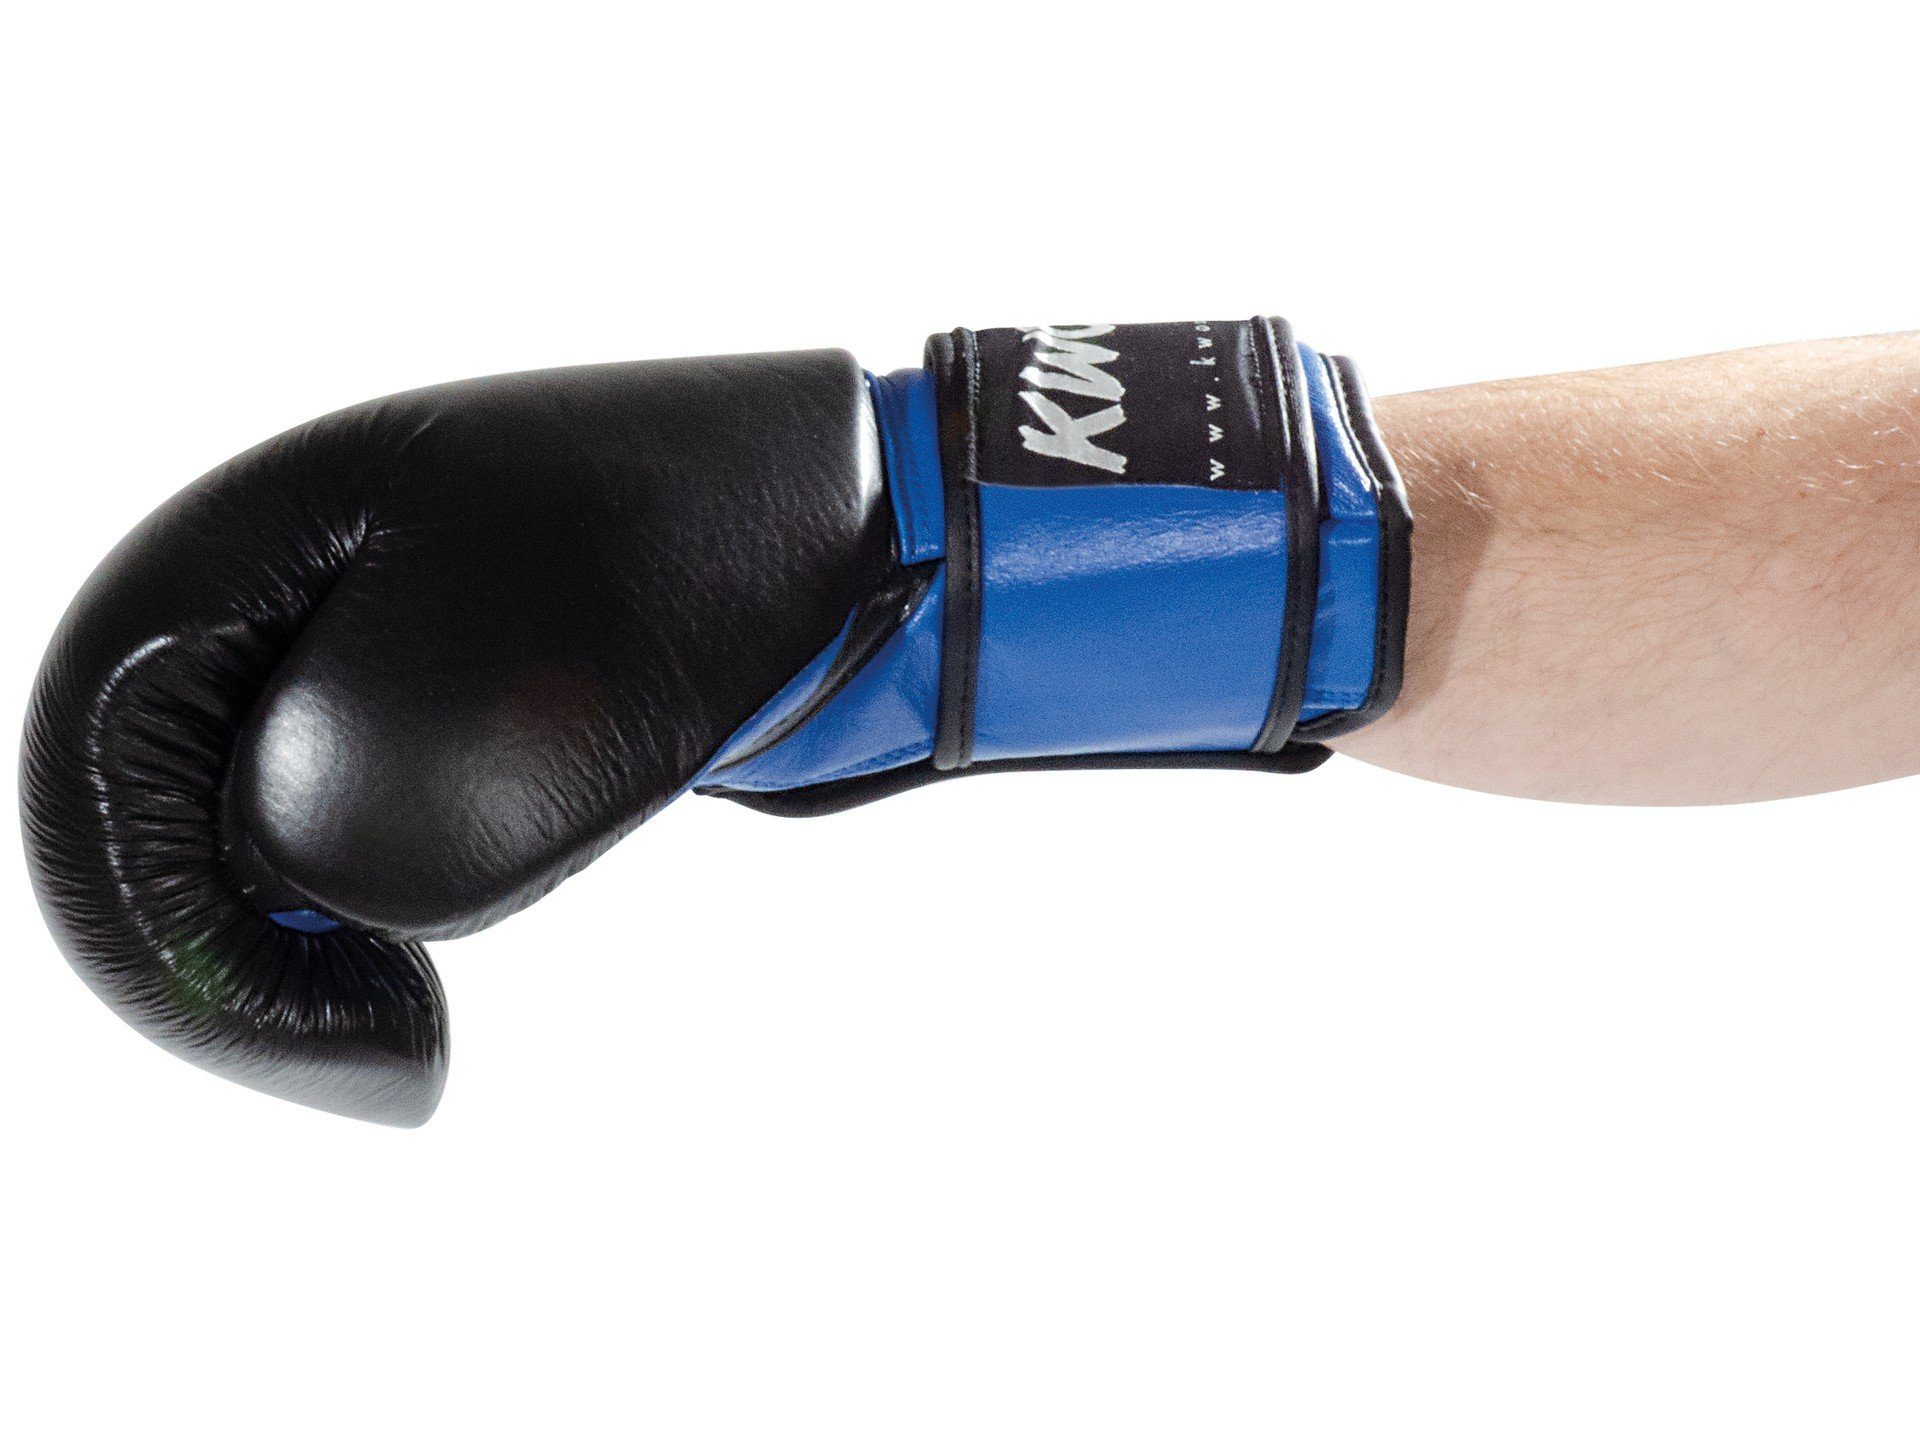 Champ Box-Handschuhe Leder, KWON schwarz/gelb (Vollkontakt, Boxen Profi Form, Ergo anerkannt Boxhandschuhe Kickboxen Paar), WKU KO Echtes Ausführung, Thaiboxen Profi Leder